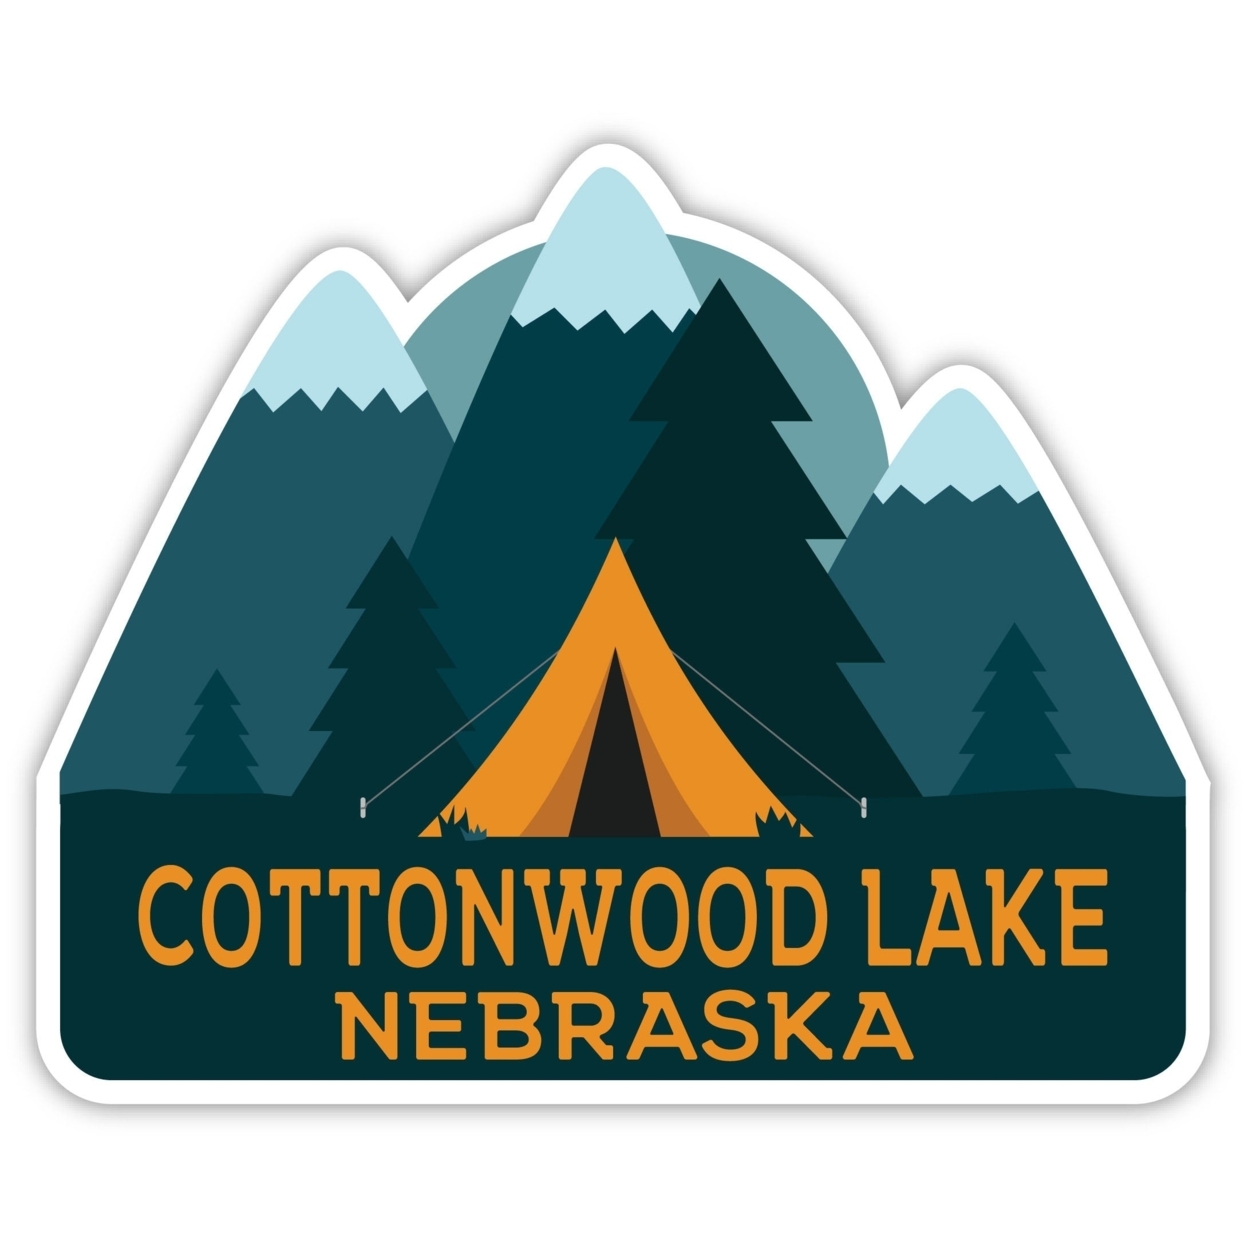 Cottonwood Lake Nebraska Souvenir Decorative Stickers (Choose Theme And Size) - 4-Pack, 2-Inch, Tent